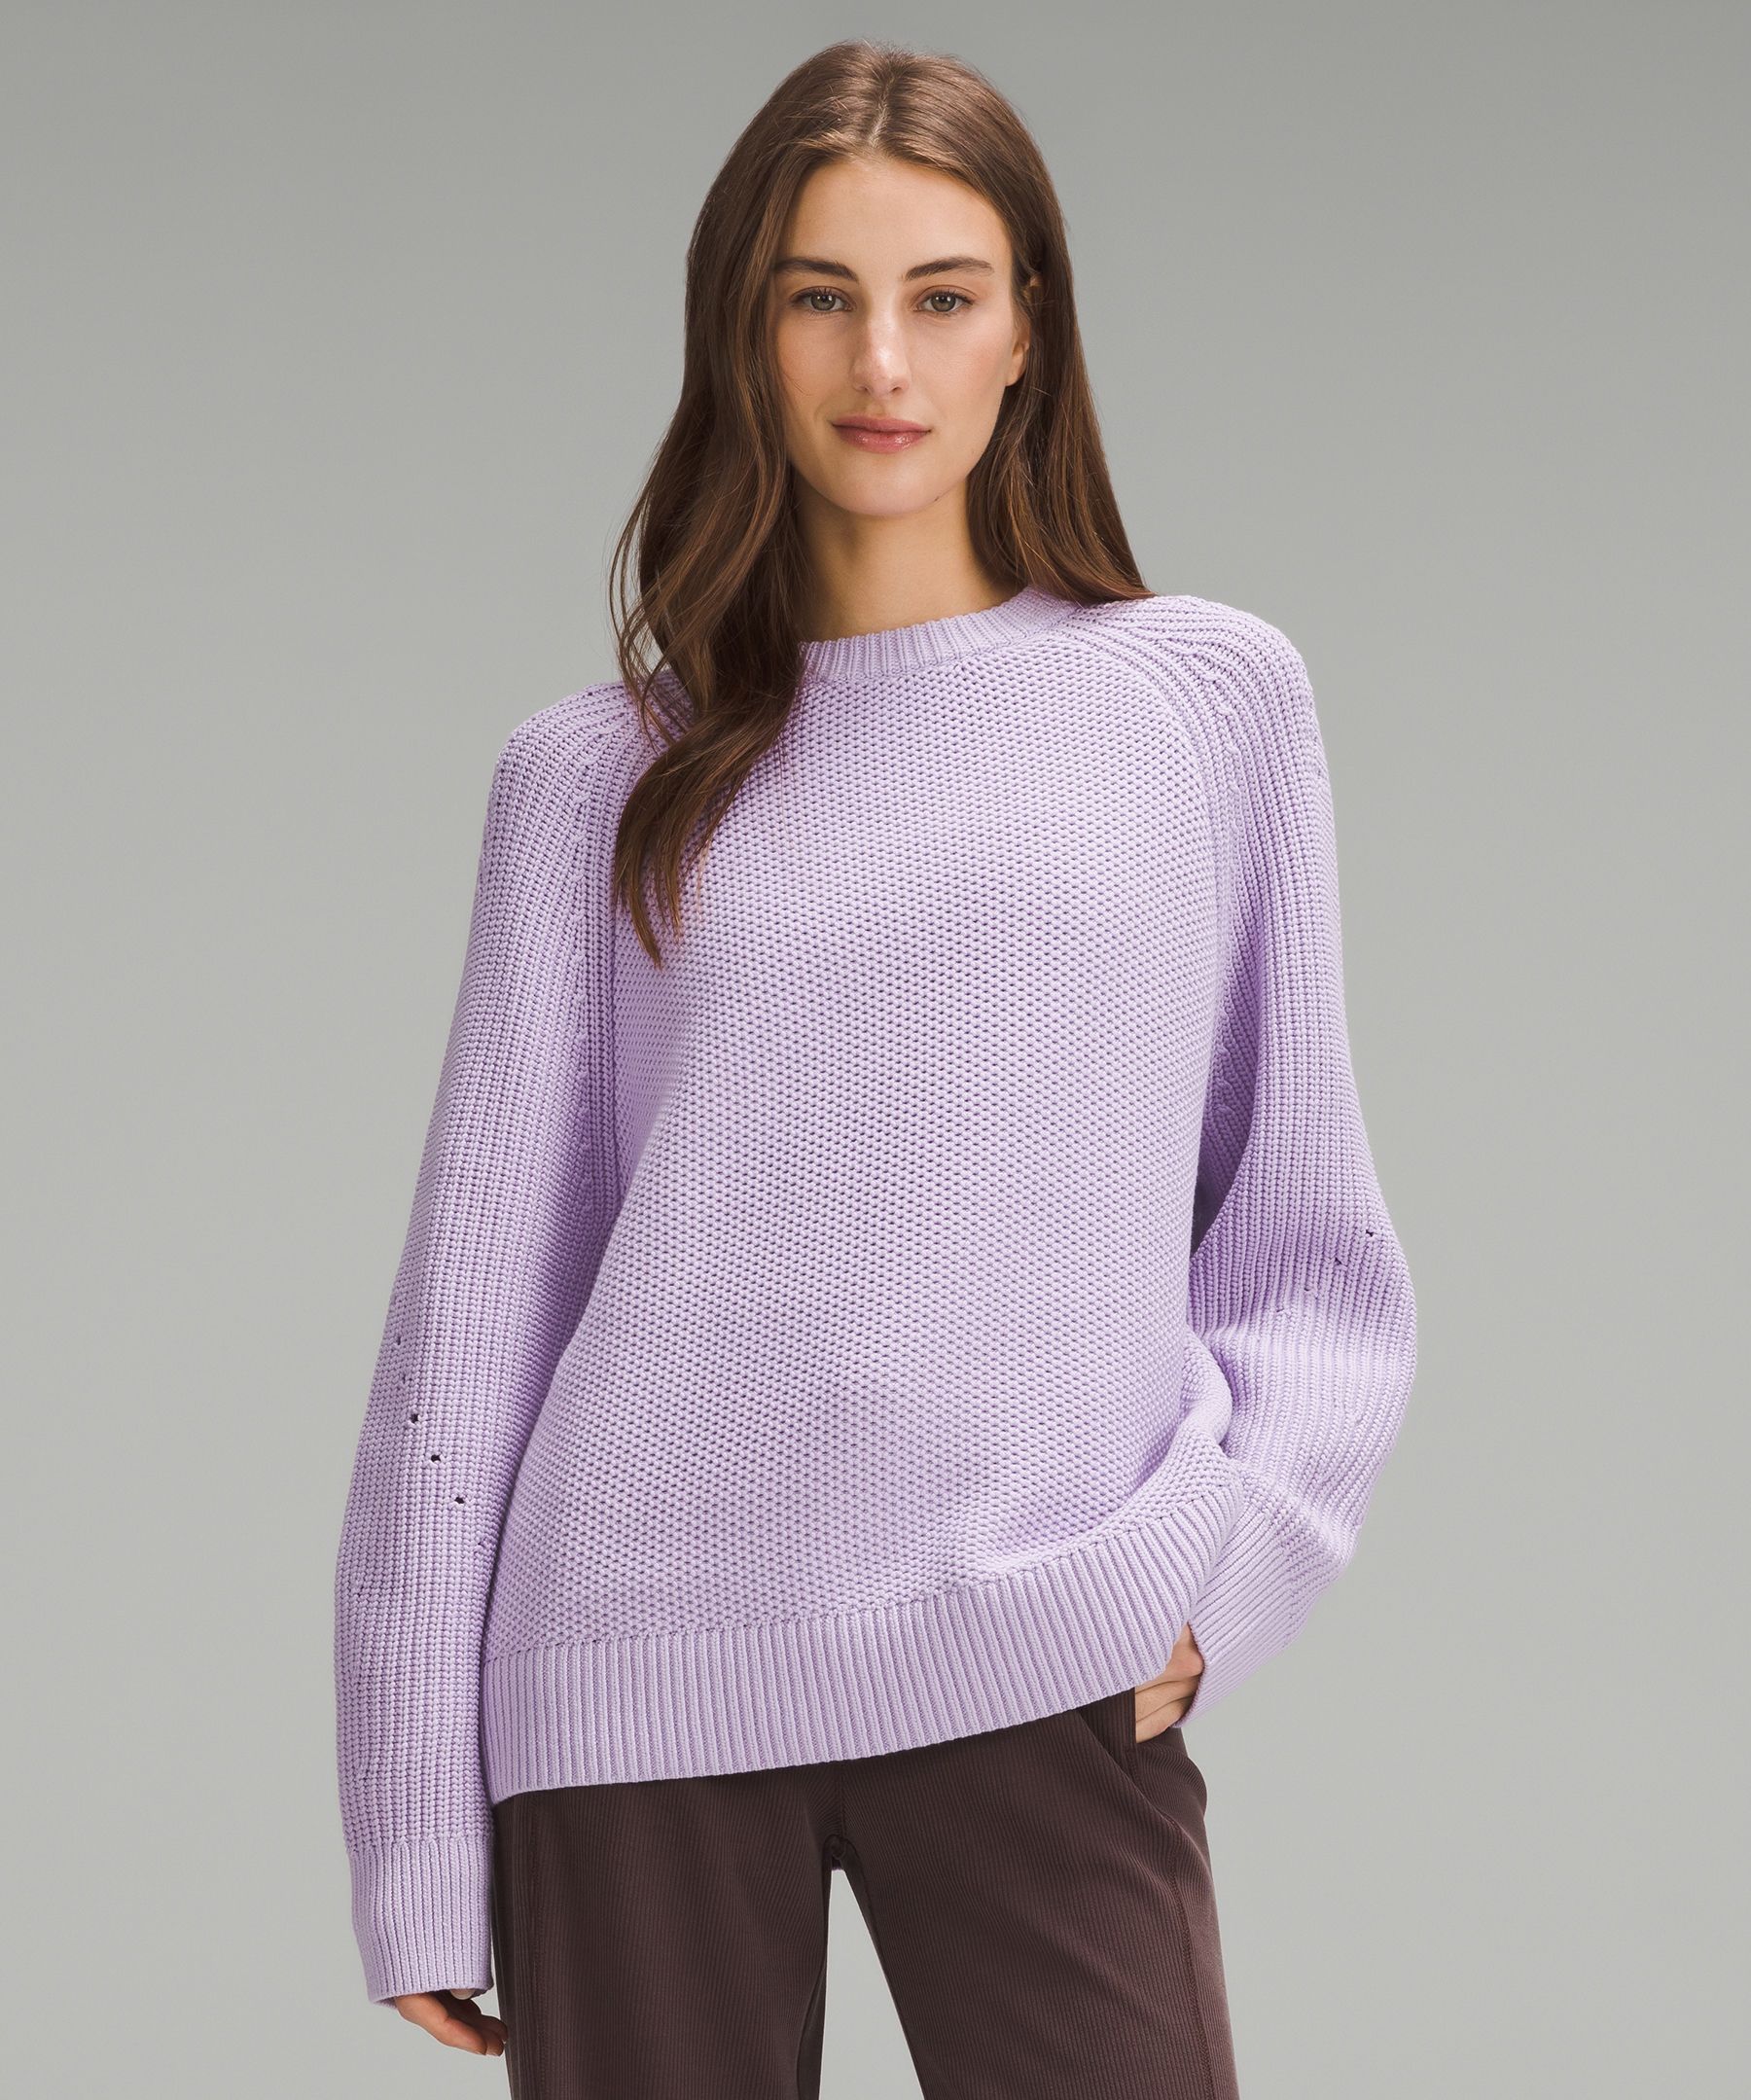 Honeycomb Crewneck Sweater, Women's Hoodies & Sweatshirts